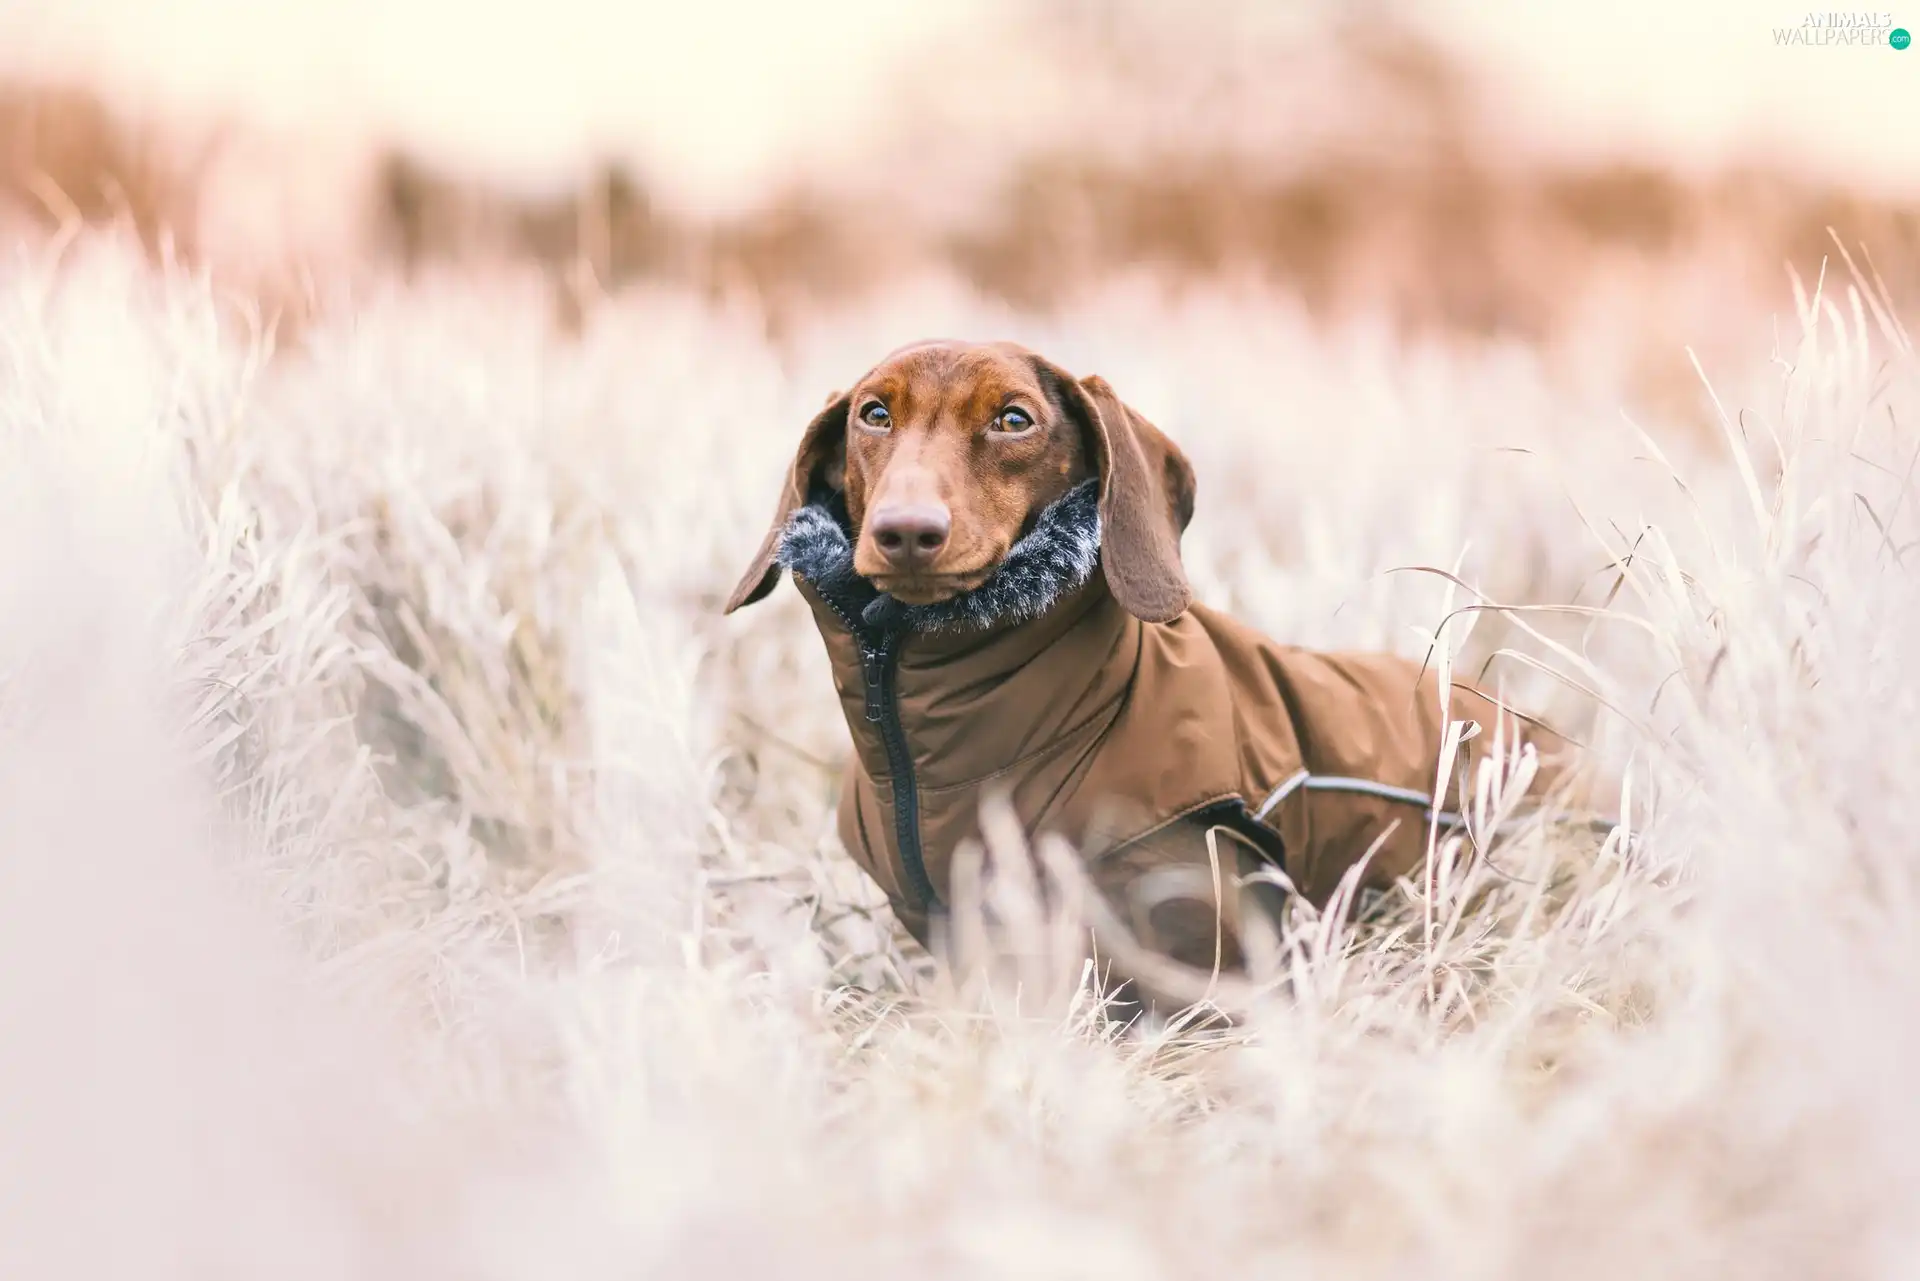 grass, White frost, dachshund, clothes, dog